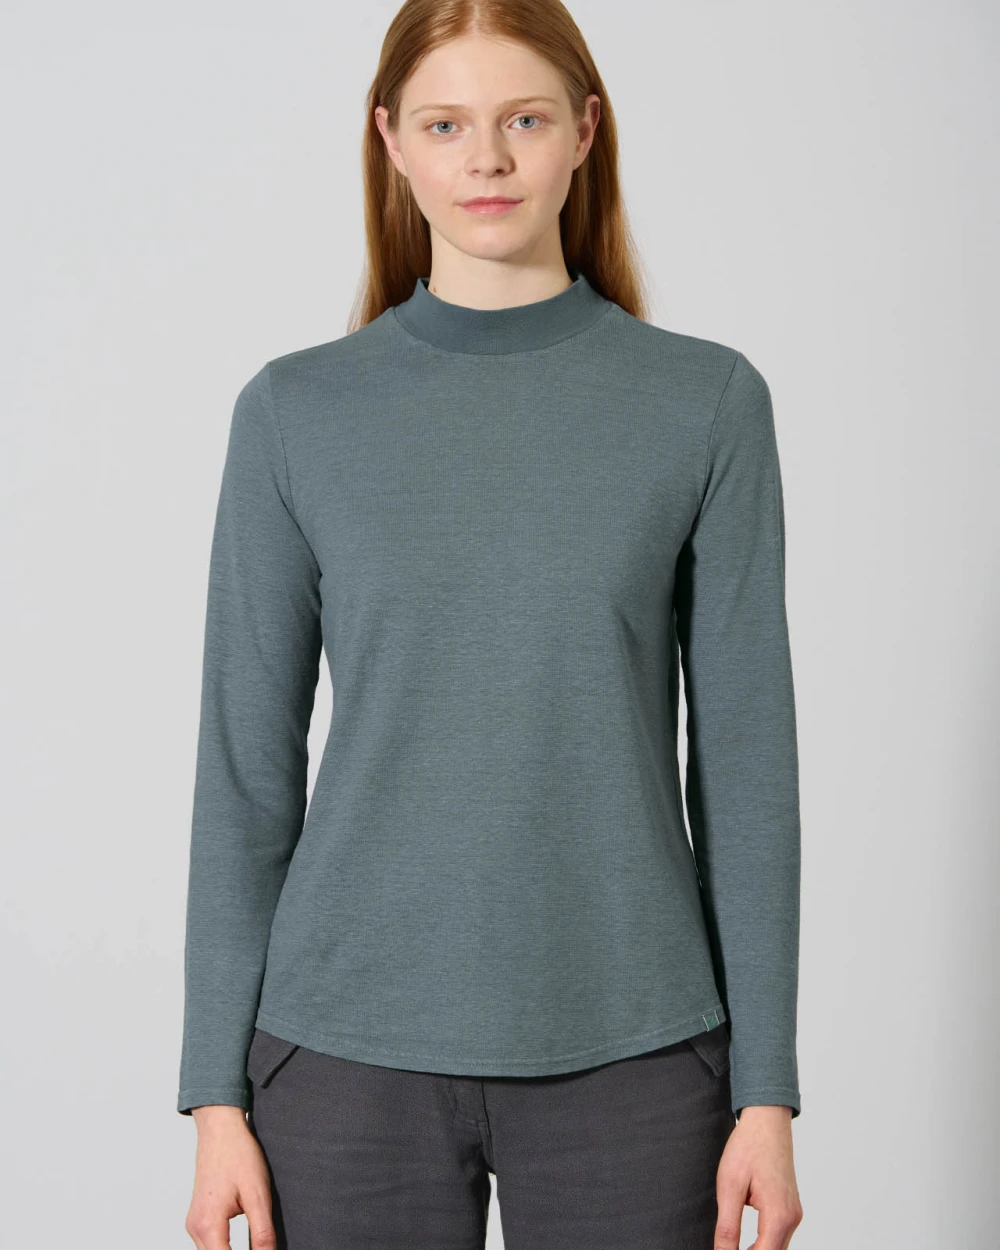 Turtleneck shirt for women in hemp and organic cotton